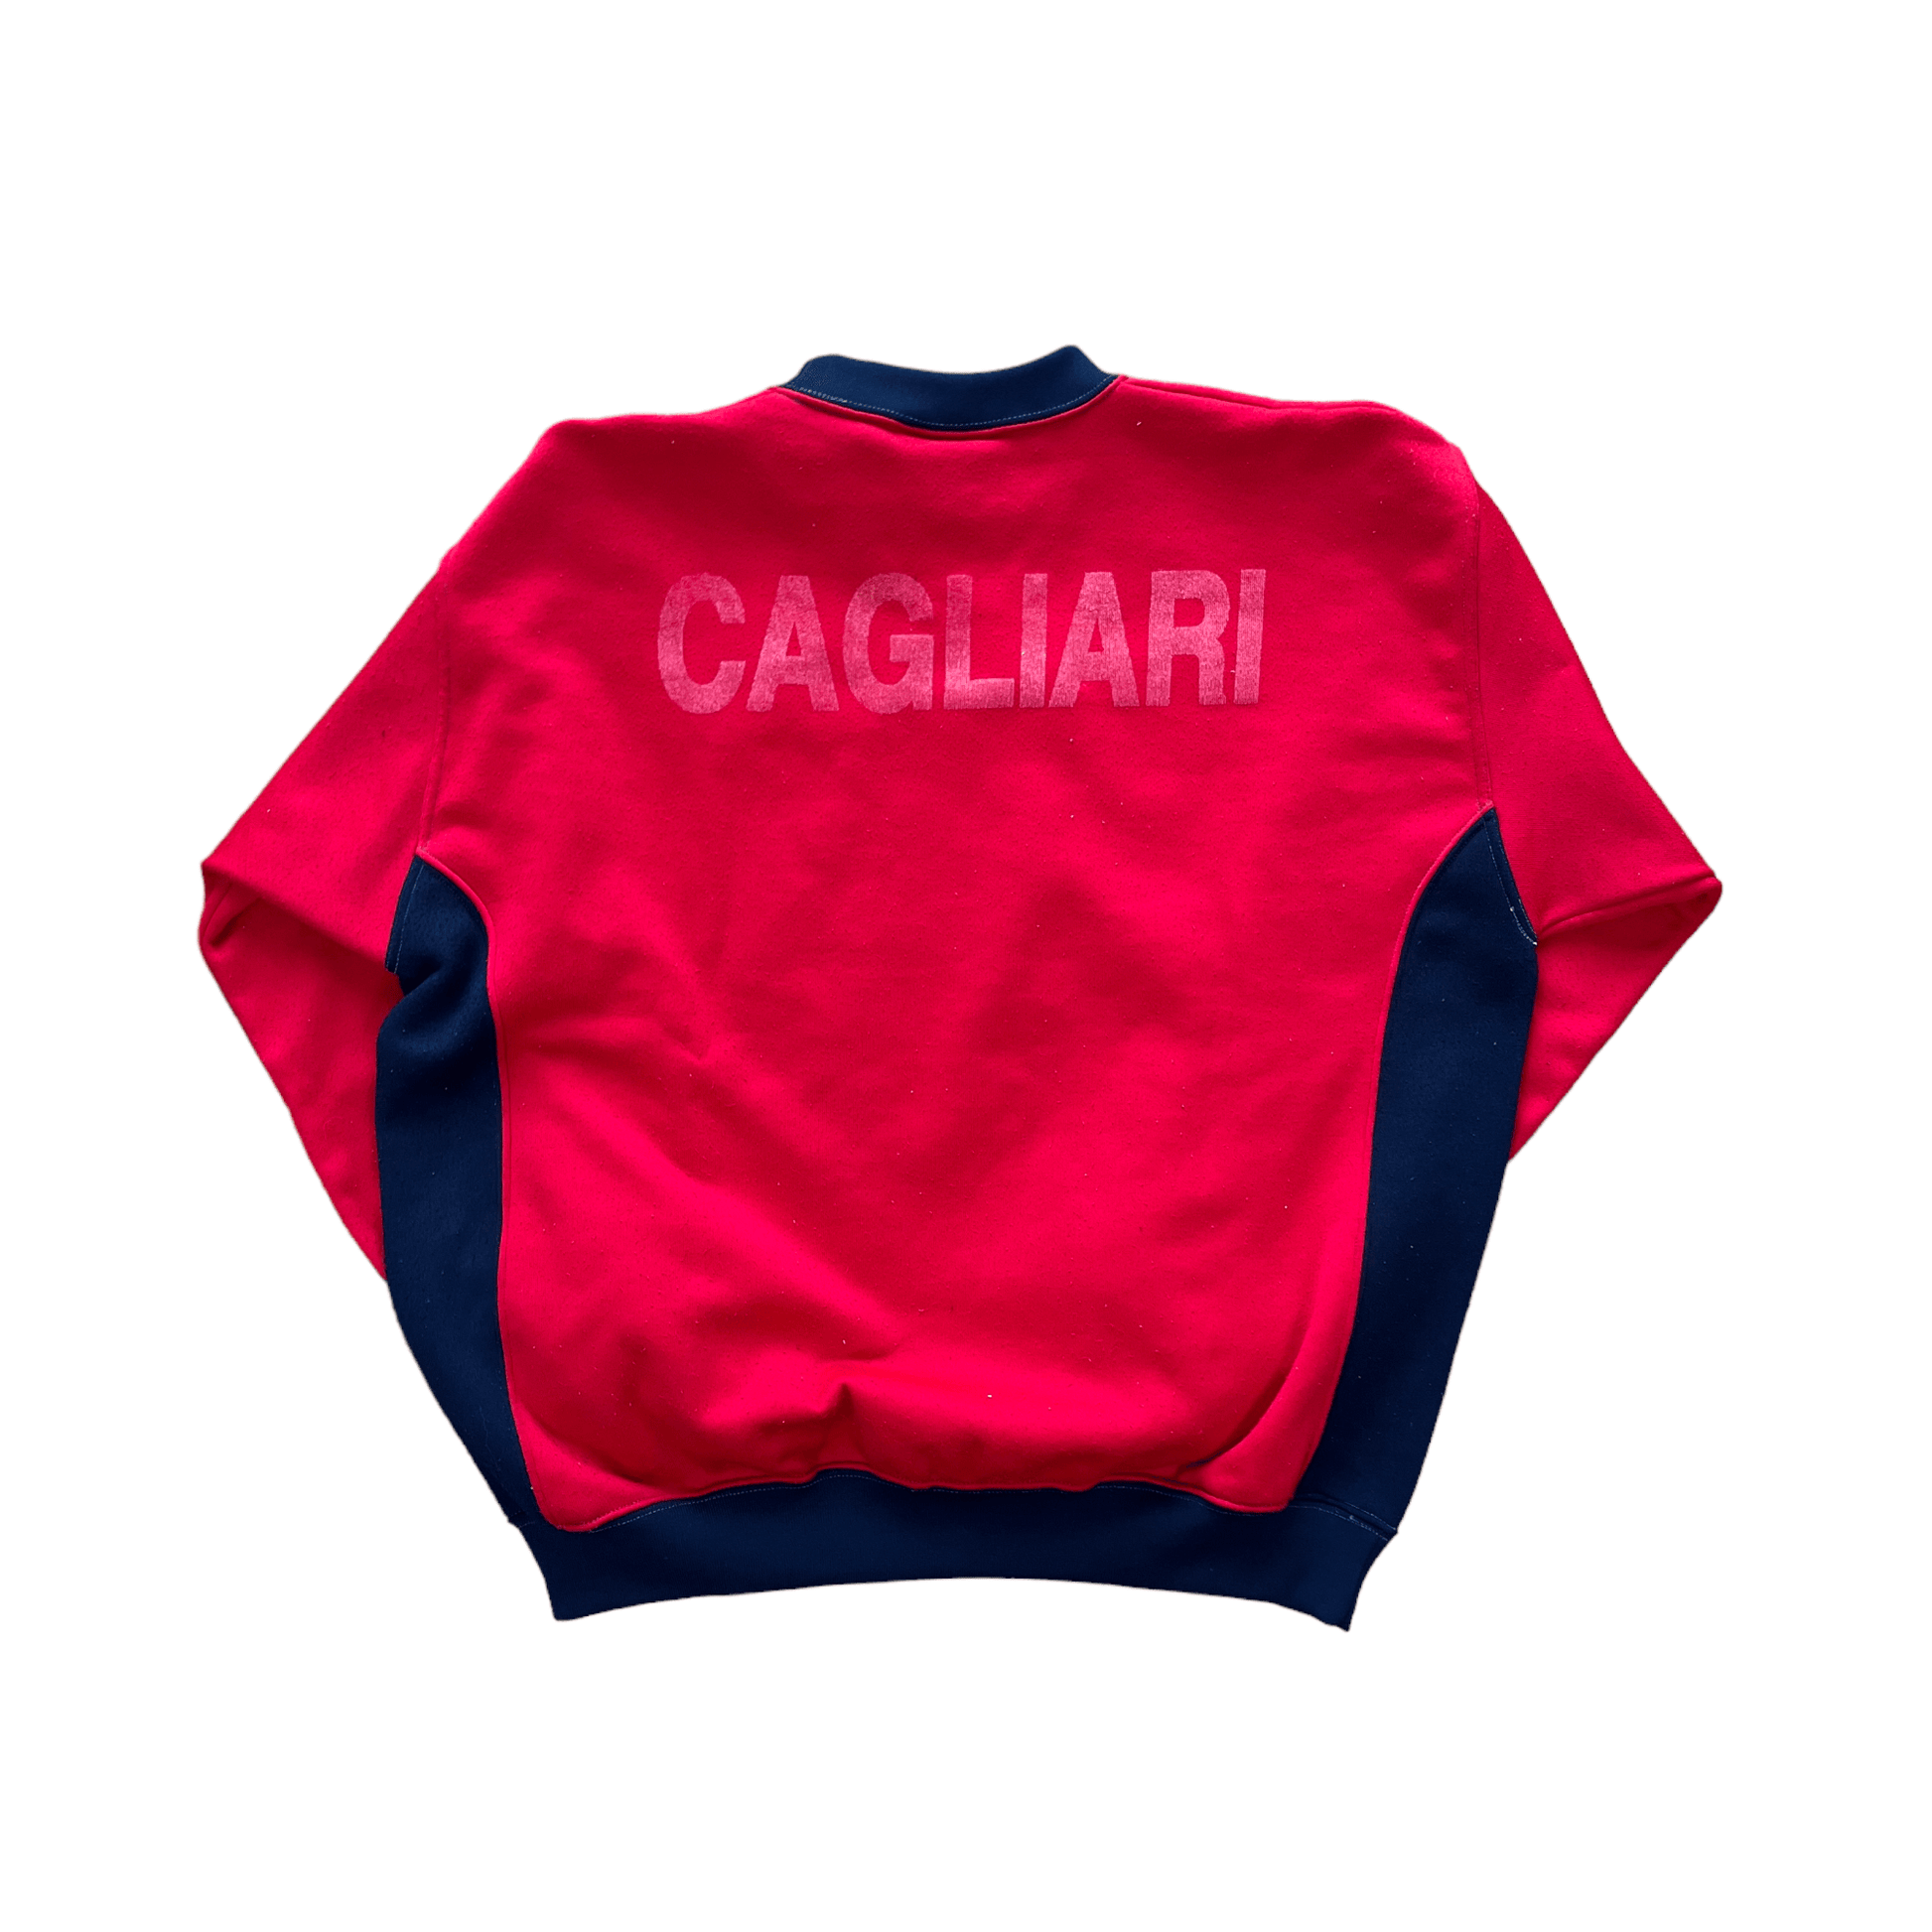 Vintage Reebok Cagliari Reebok Sweatshirt - Large - The Streetwear Studio